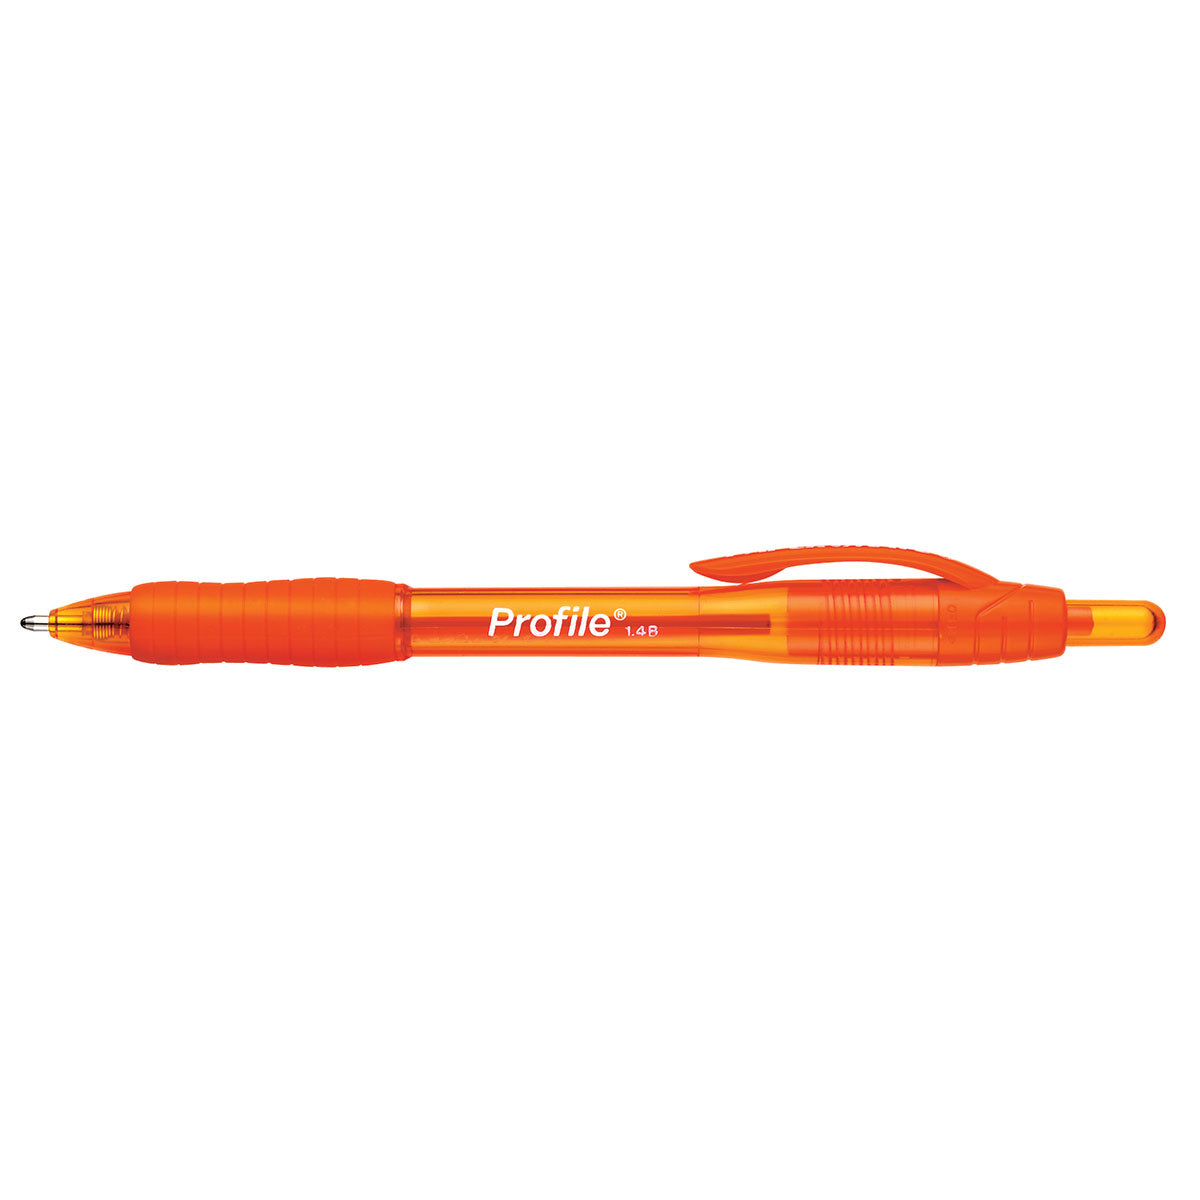 Paper Mate Profile Orange 1.4b Pen Retractable, Bold Point  Paper Mate Ballpoint Pen